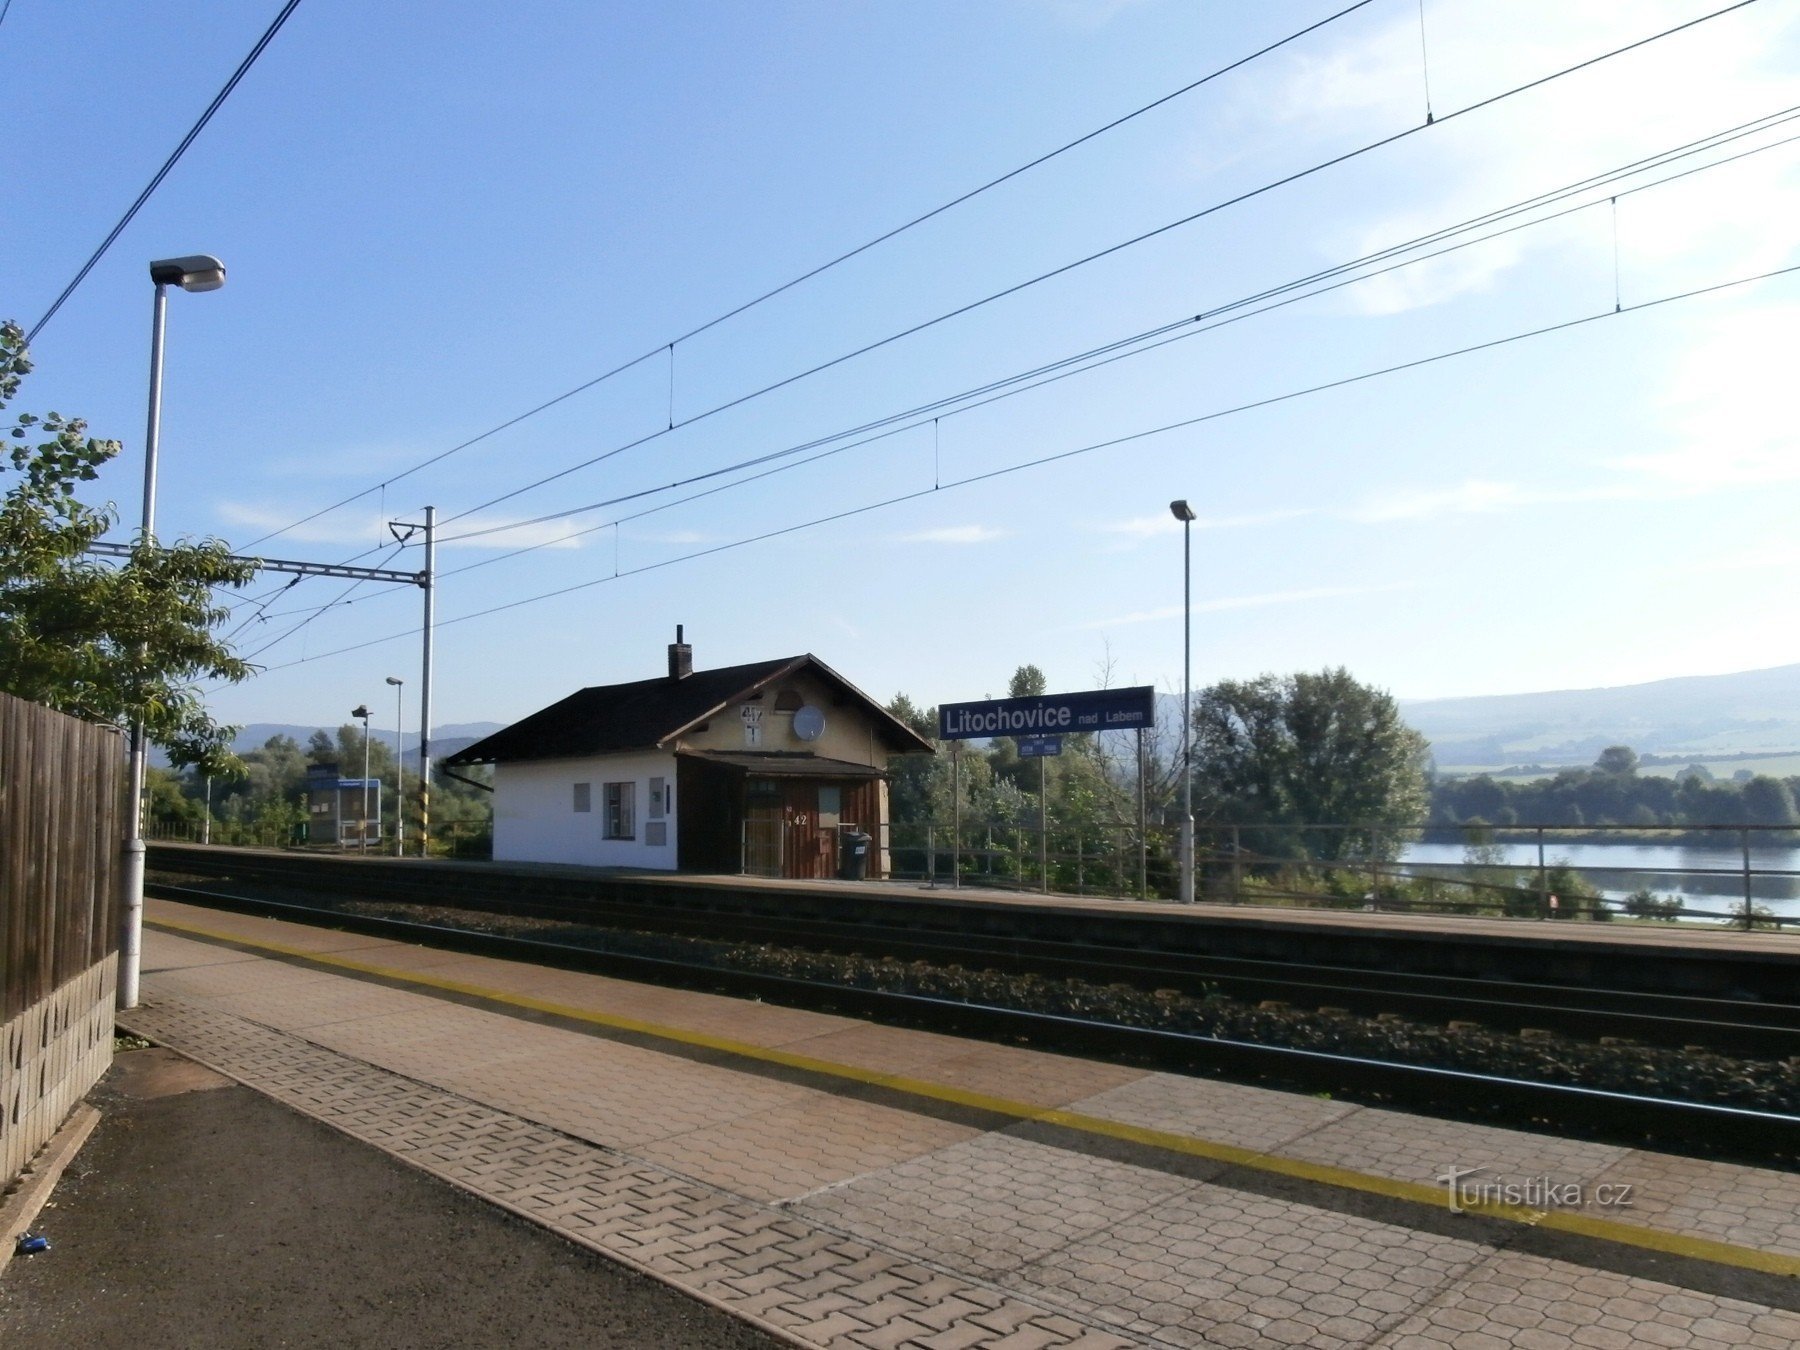 1. Stația de tren Litochovice nad Labem